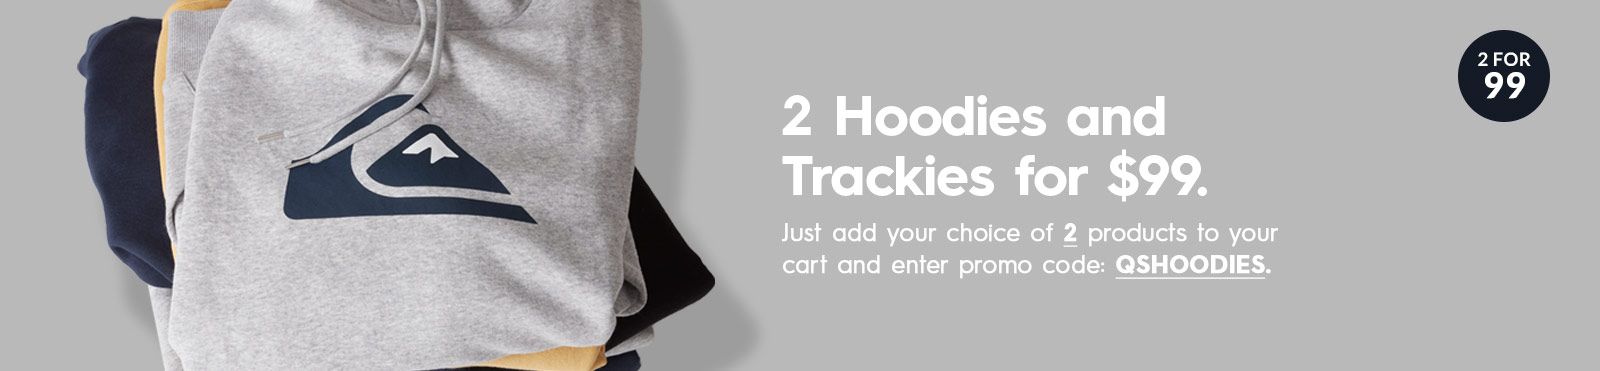 Get 2 hoodies or trackies for $99